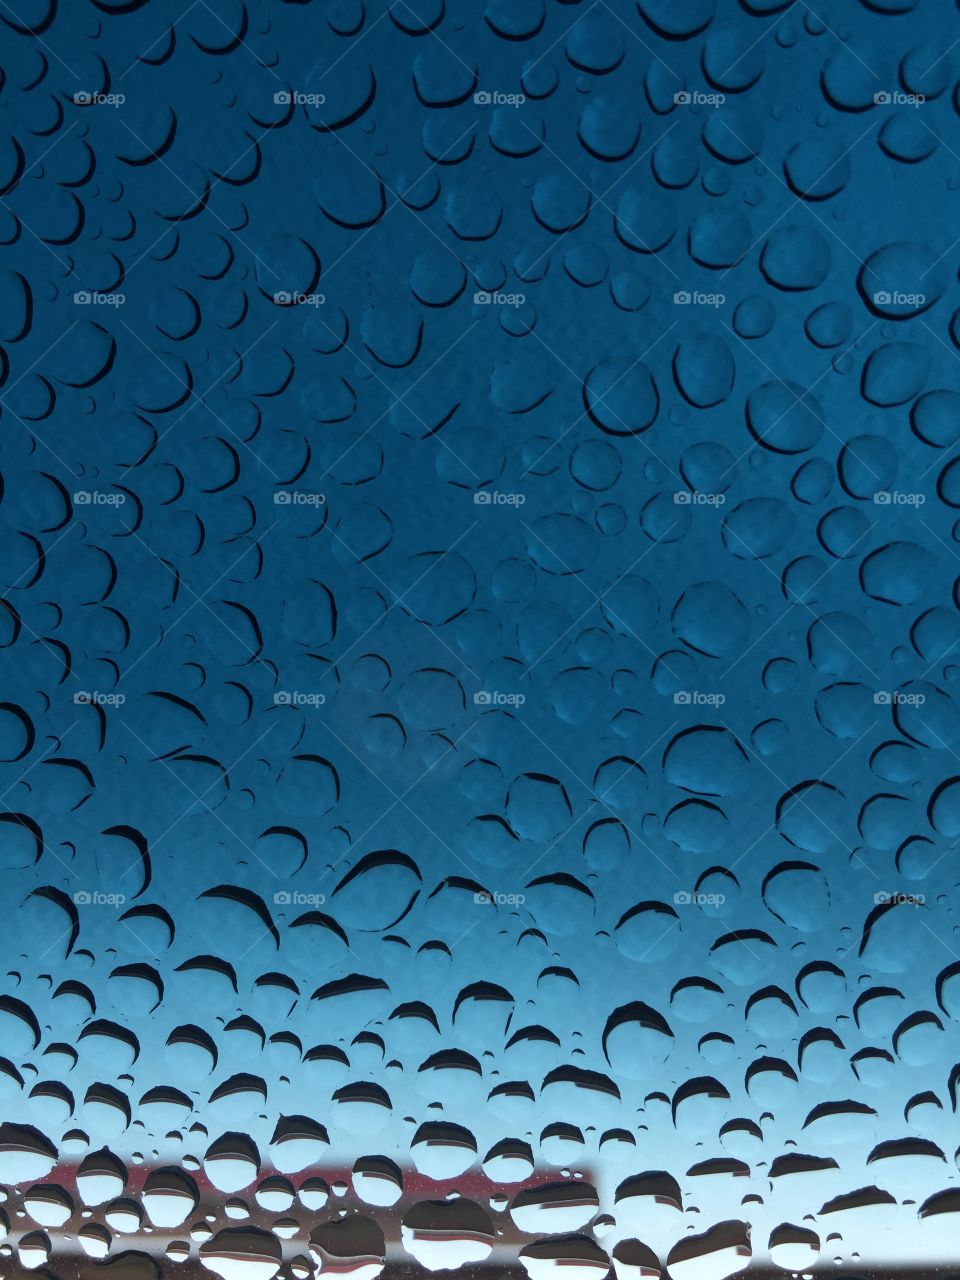 Raindrops on the car window 